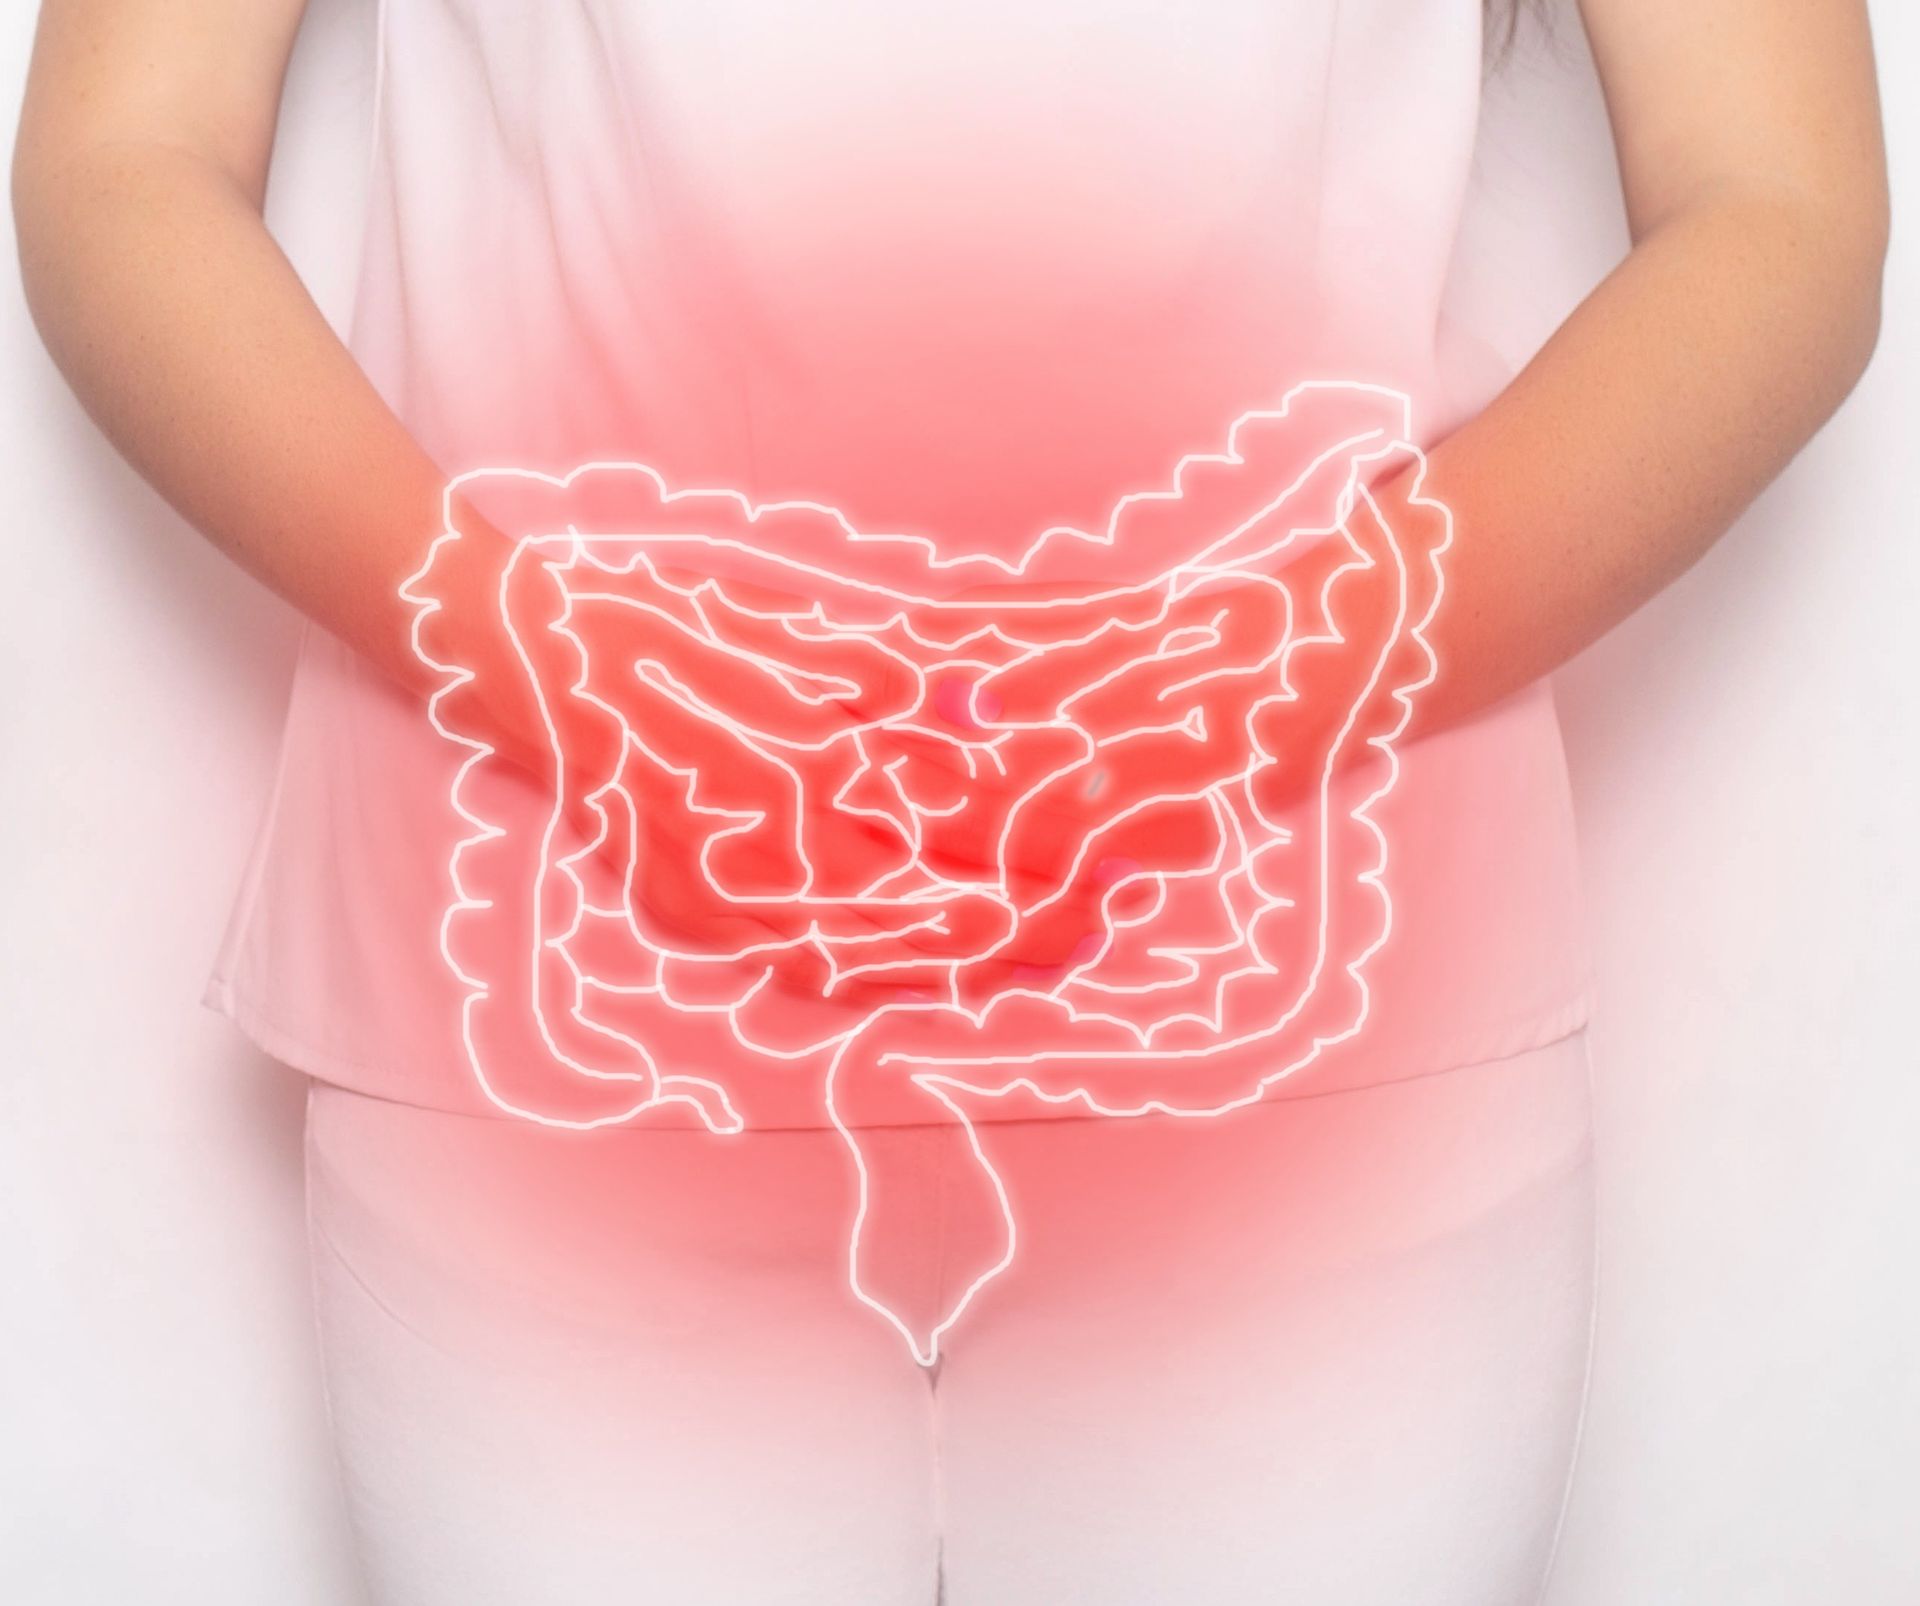 Mucositis of small intestine